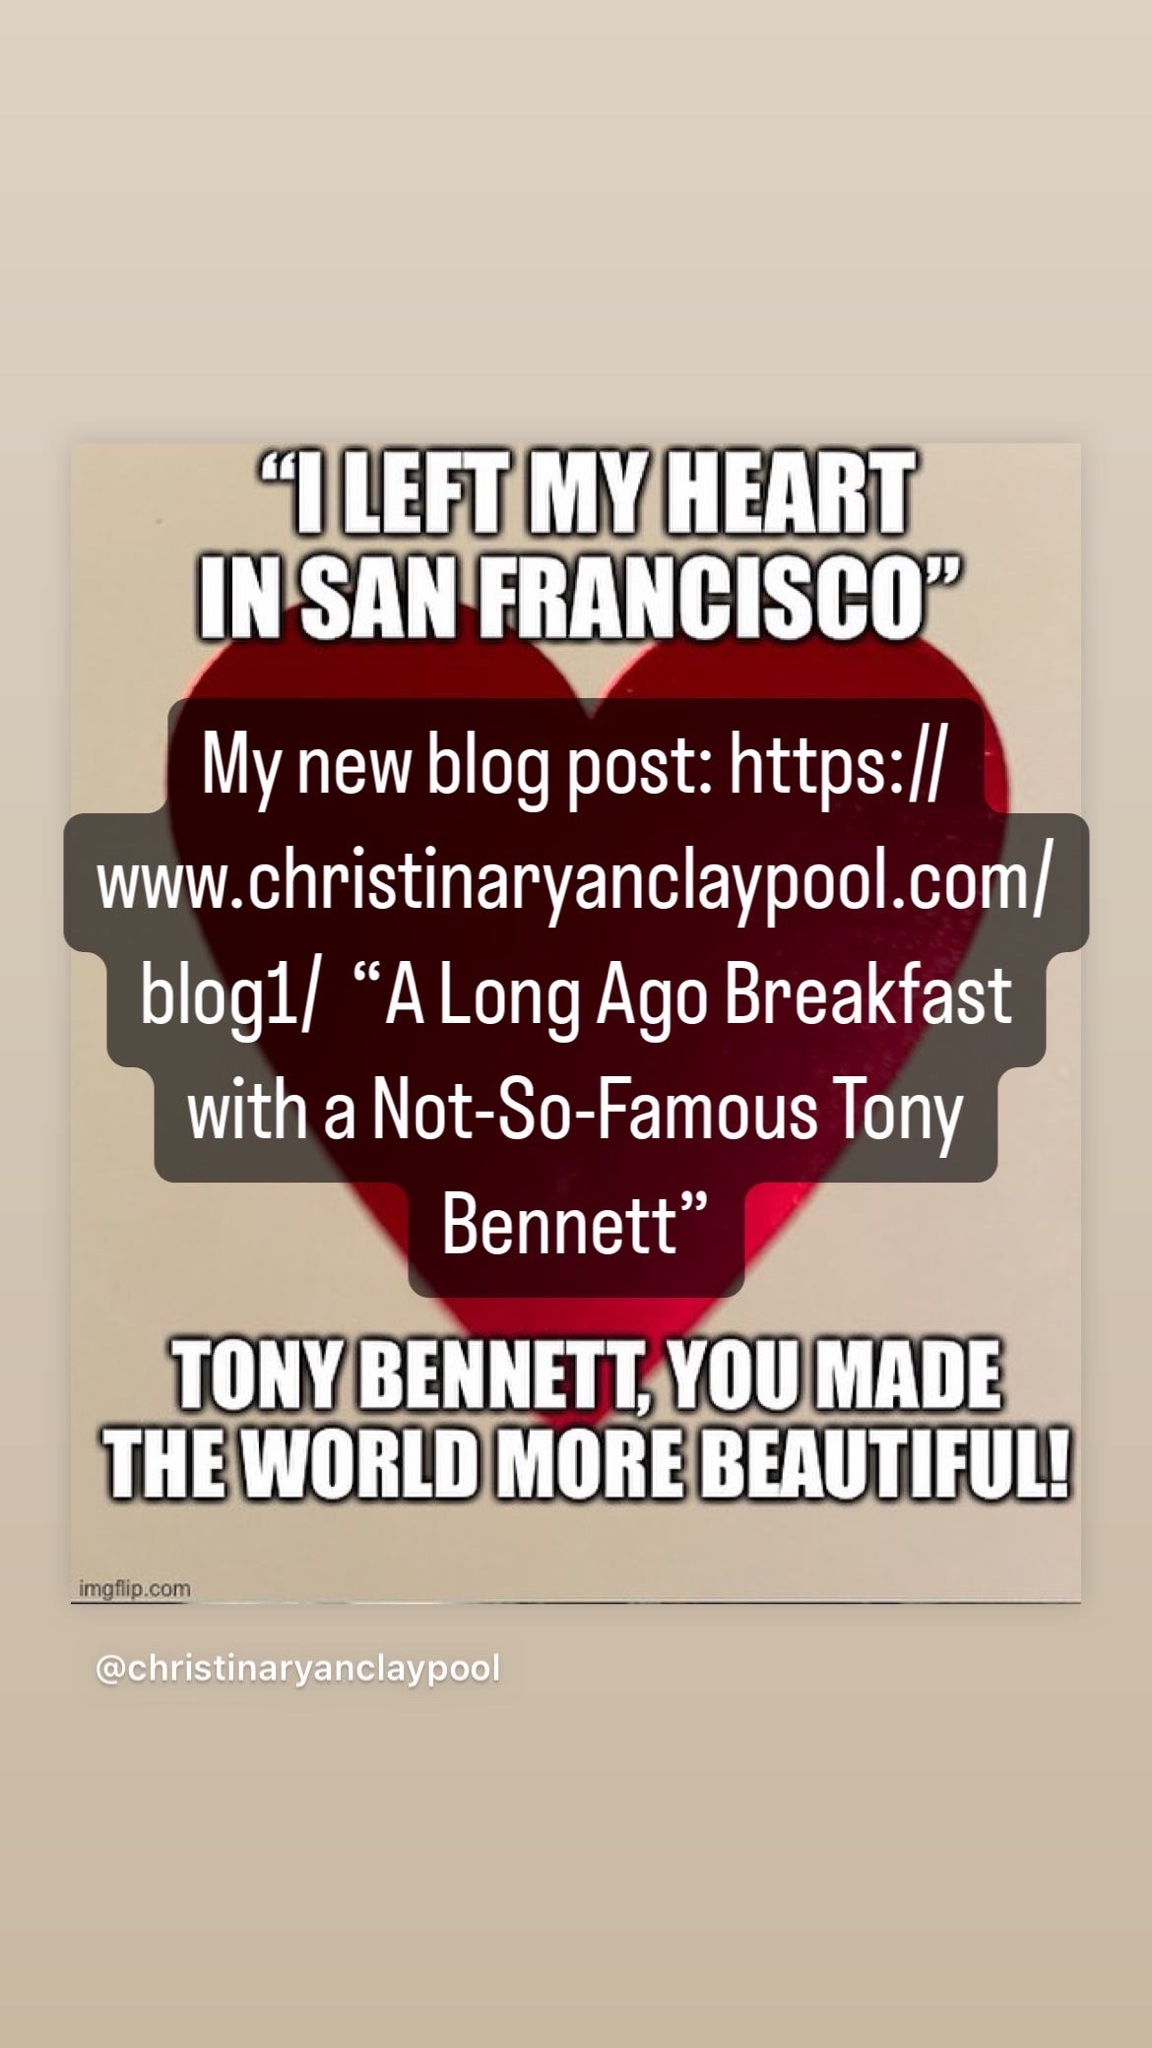 I agree with Tony here - Imgflip